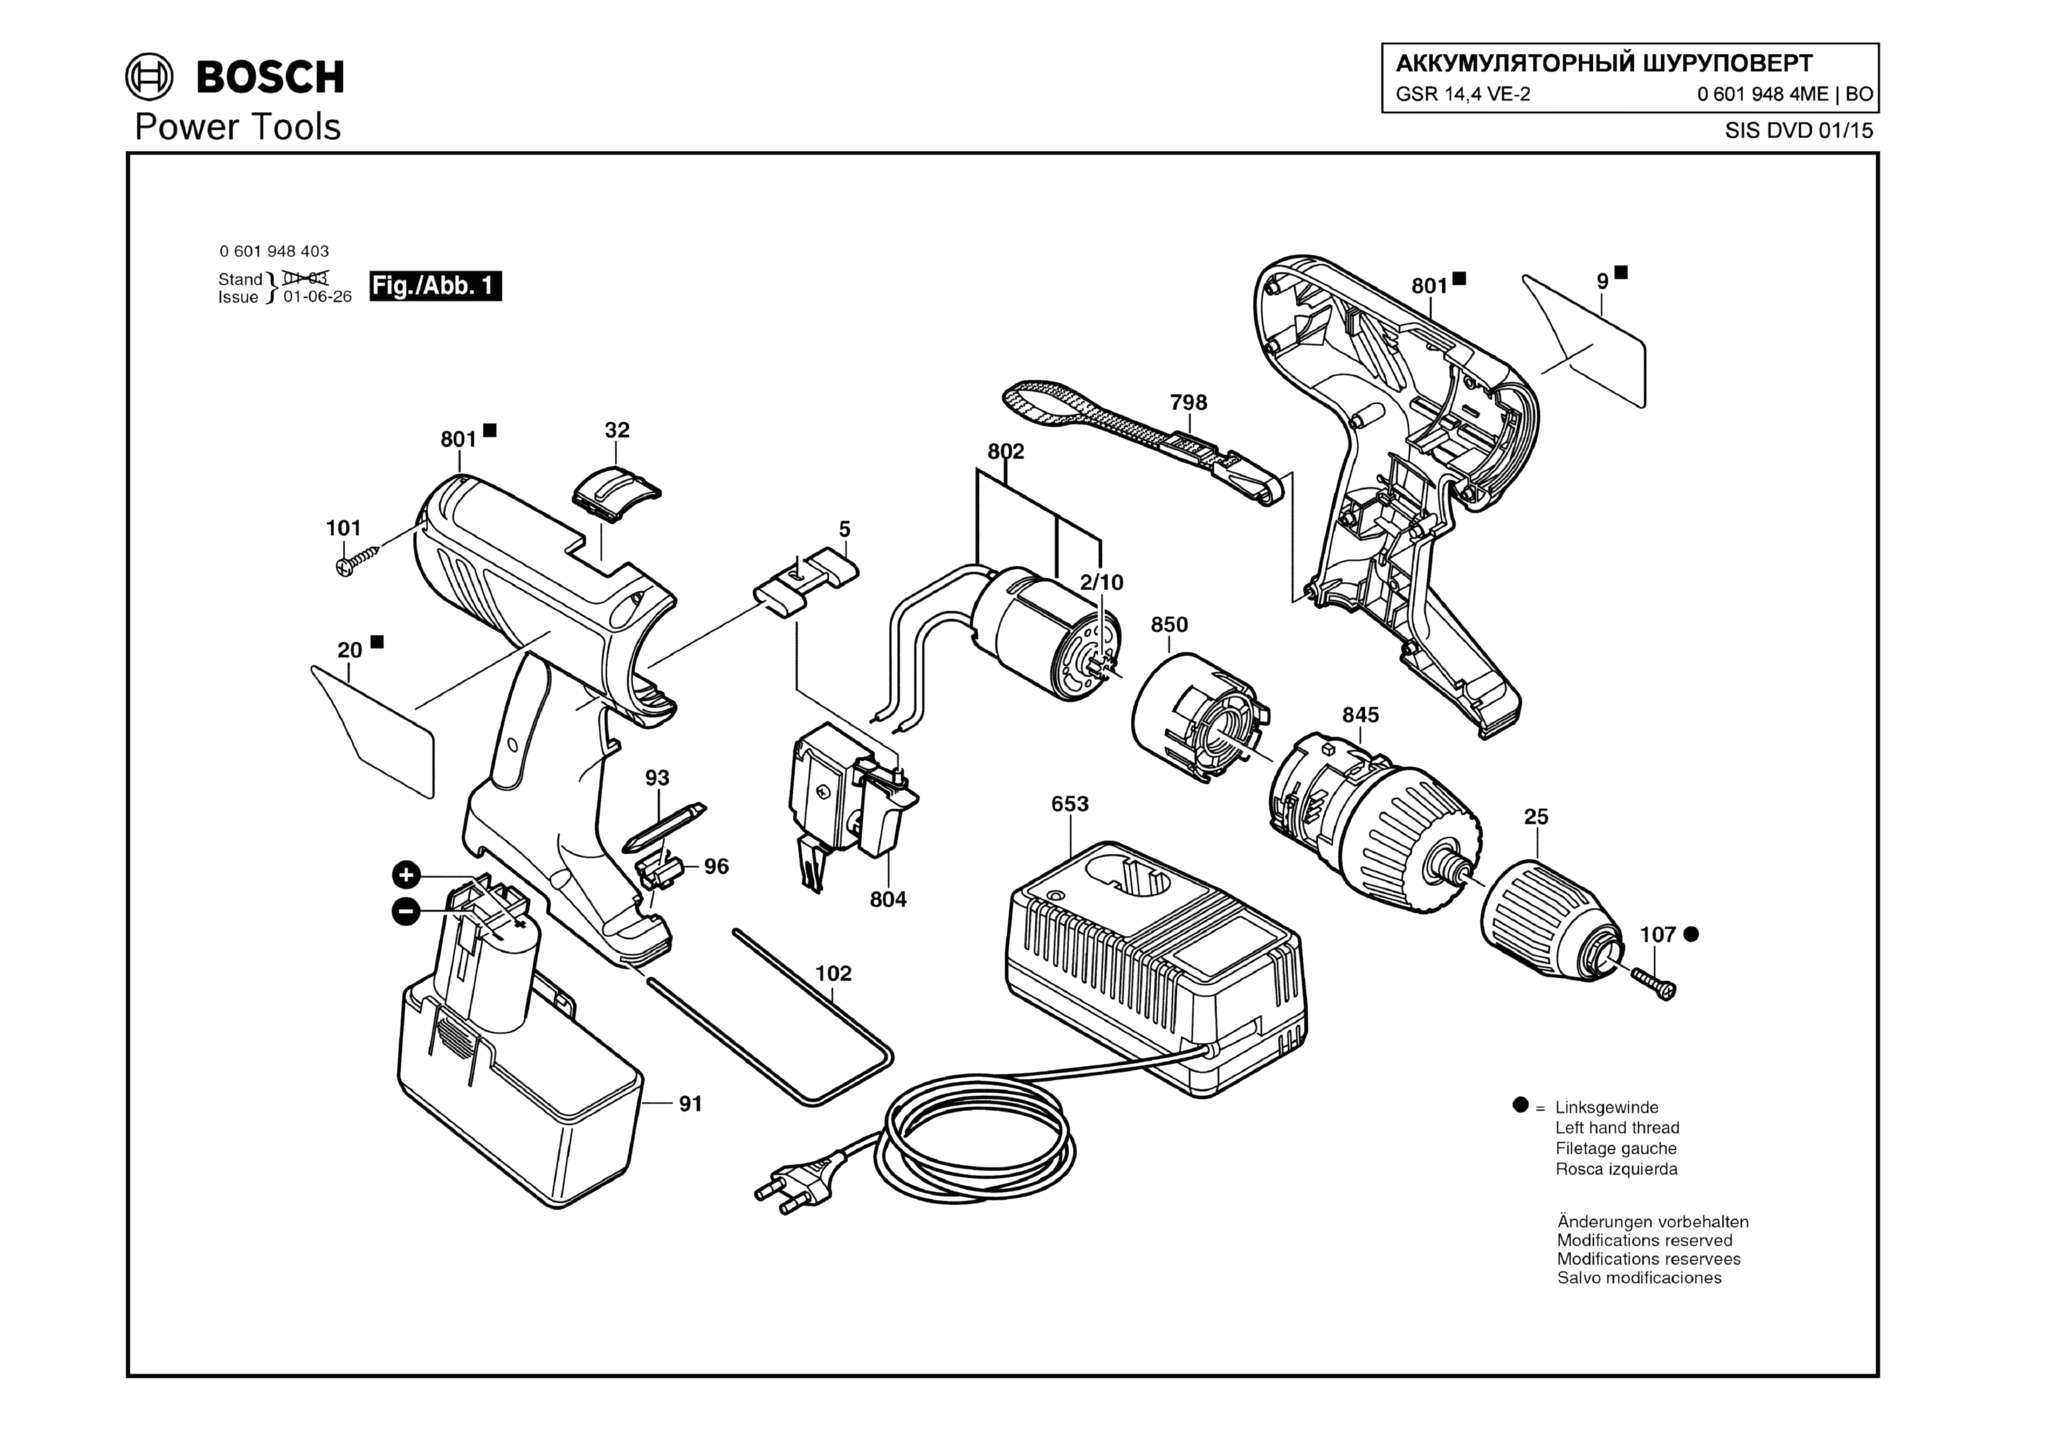 Запчасти, схема и деталировка Bosch GSR 14,4 VE-2 (ТИП 06019484ME)